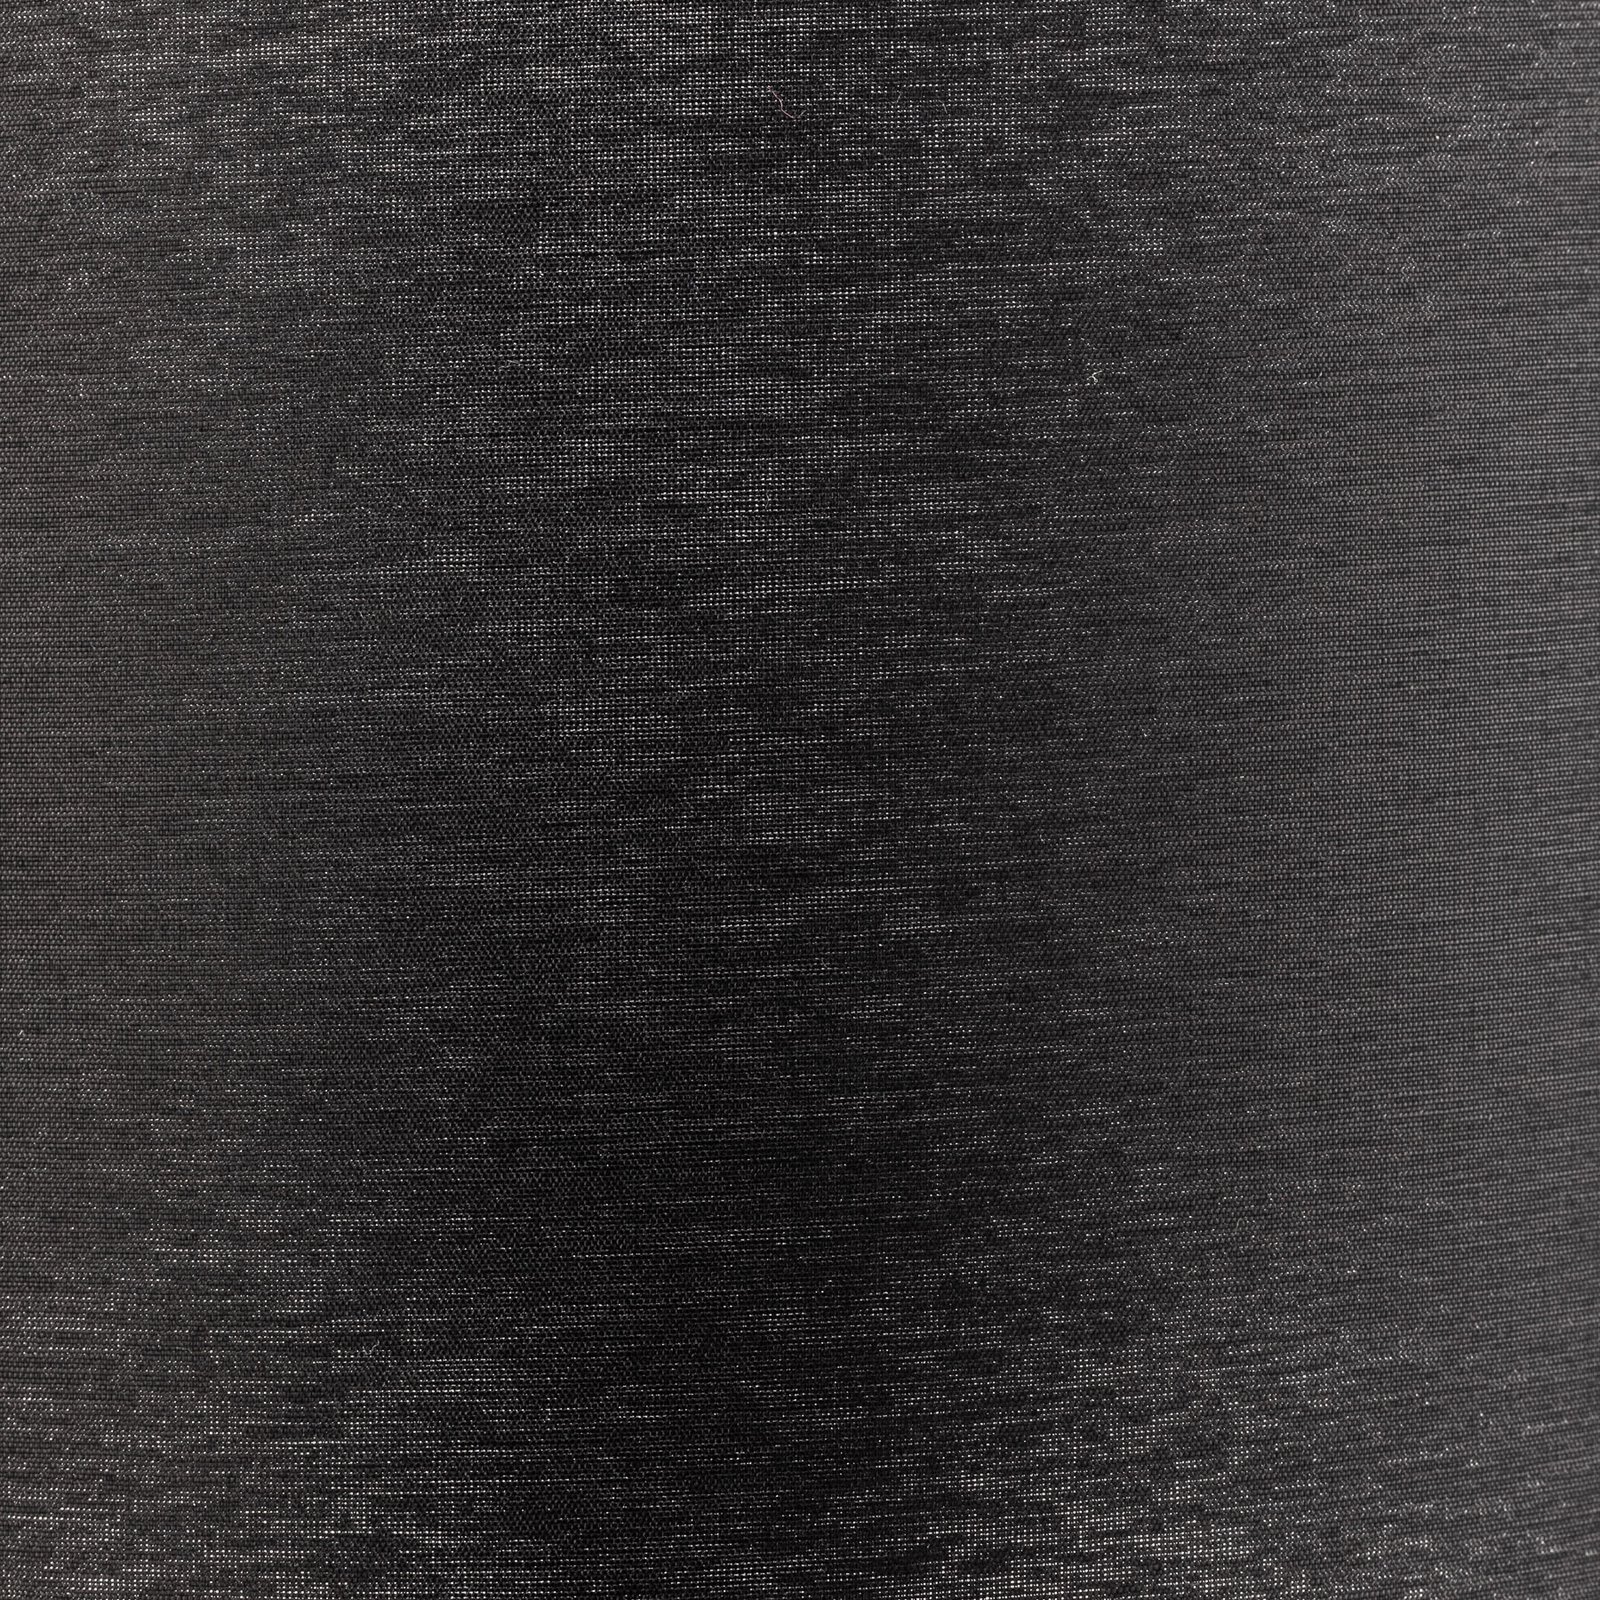 Lampskärm Alba, Ø 20 cm, E27, svart